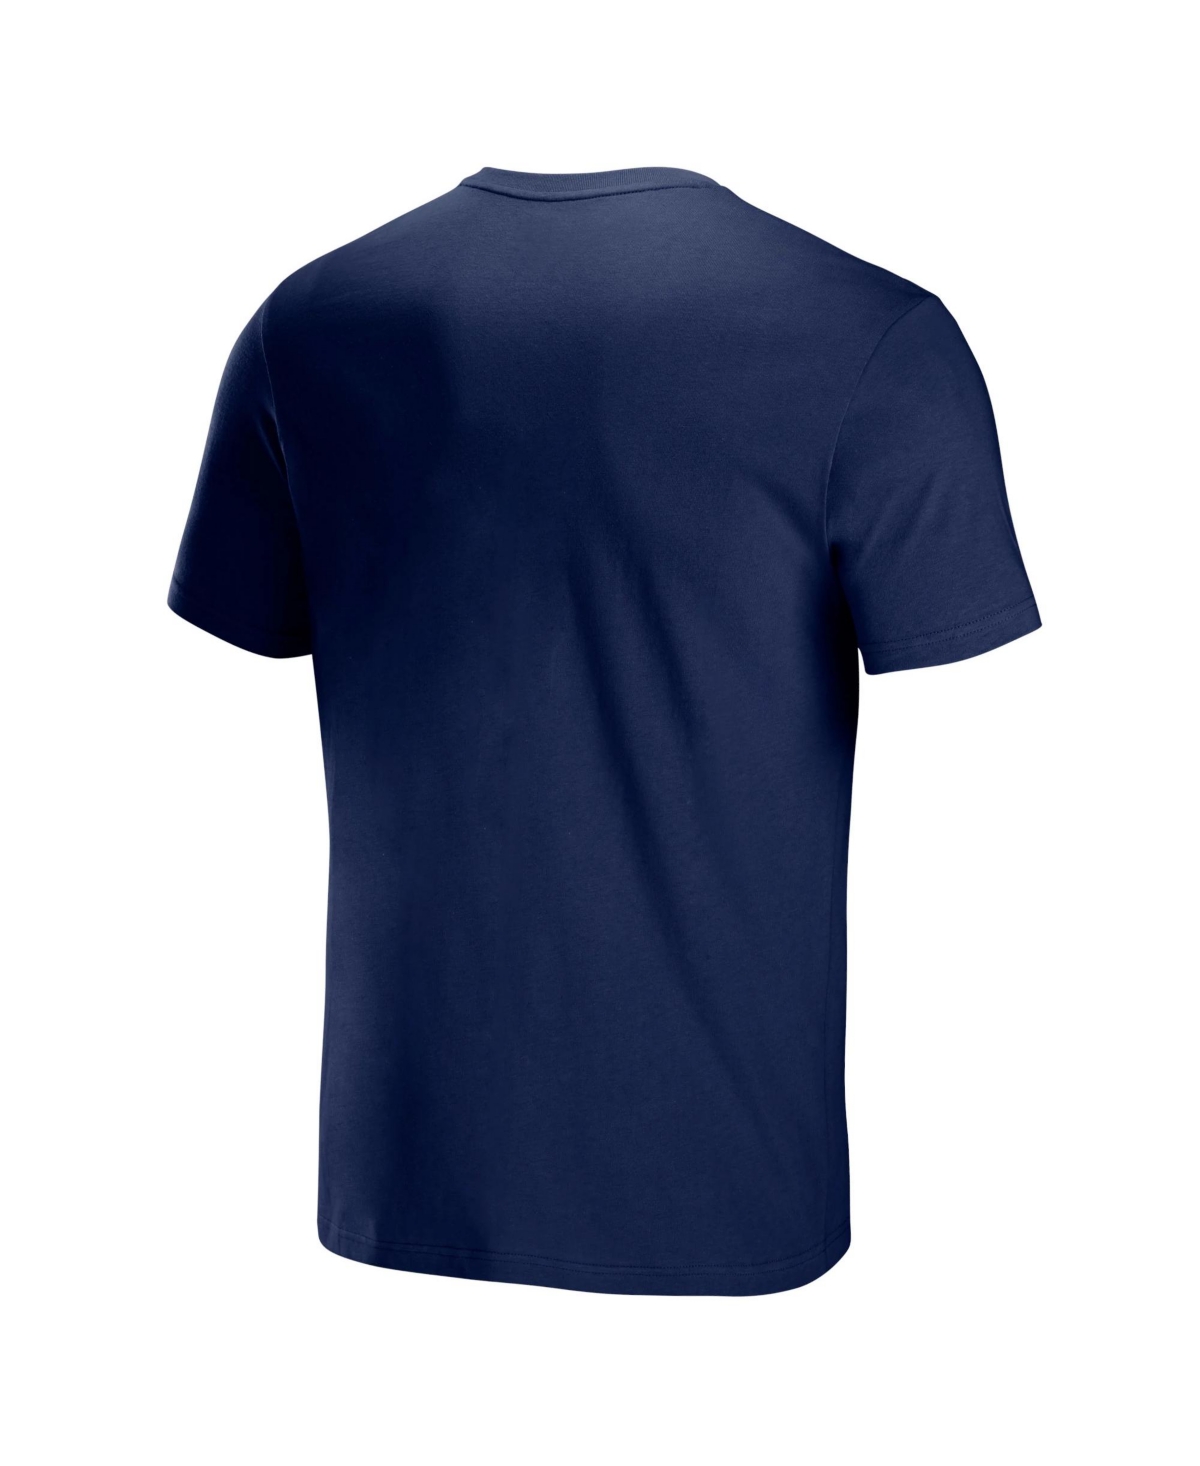 Shop Nfl Properties Men's Nfl X Staple Navy New England Patriots Lockup Logo Short Sleeve T-shirt